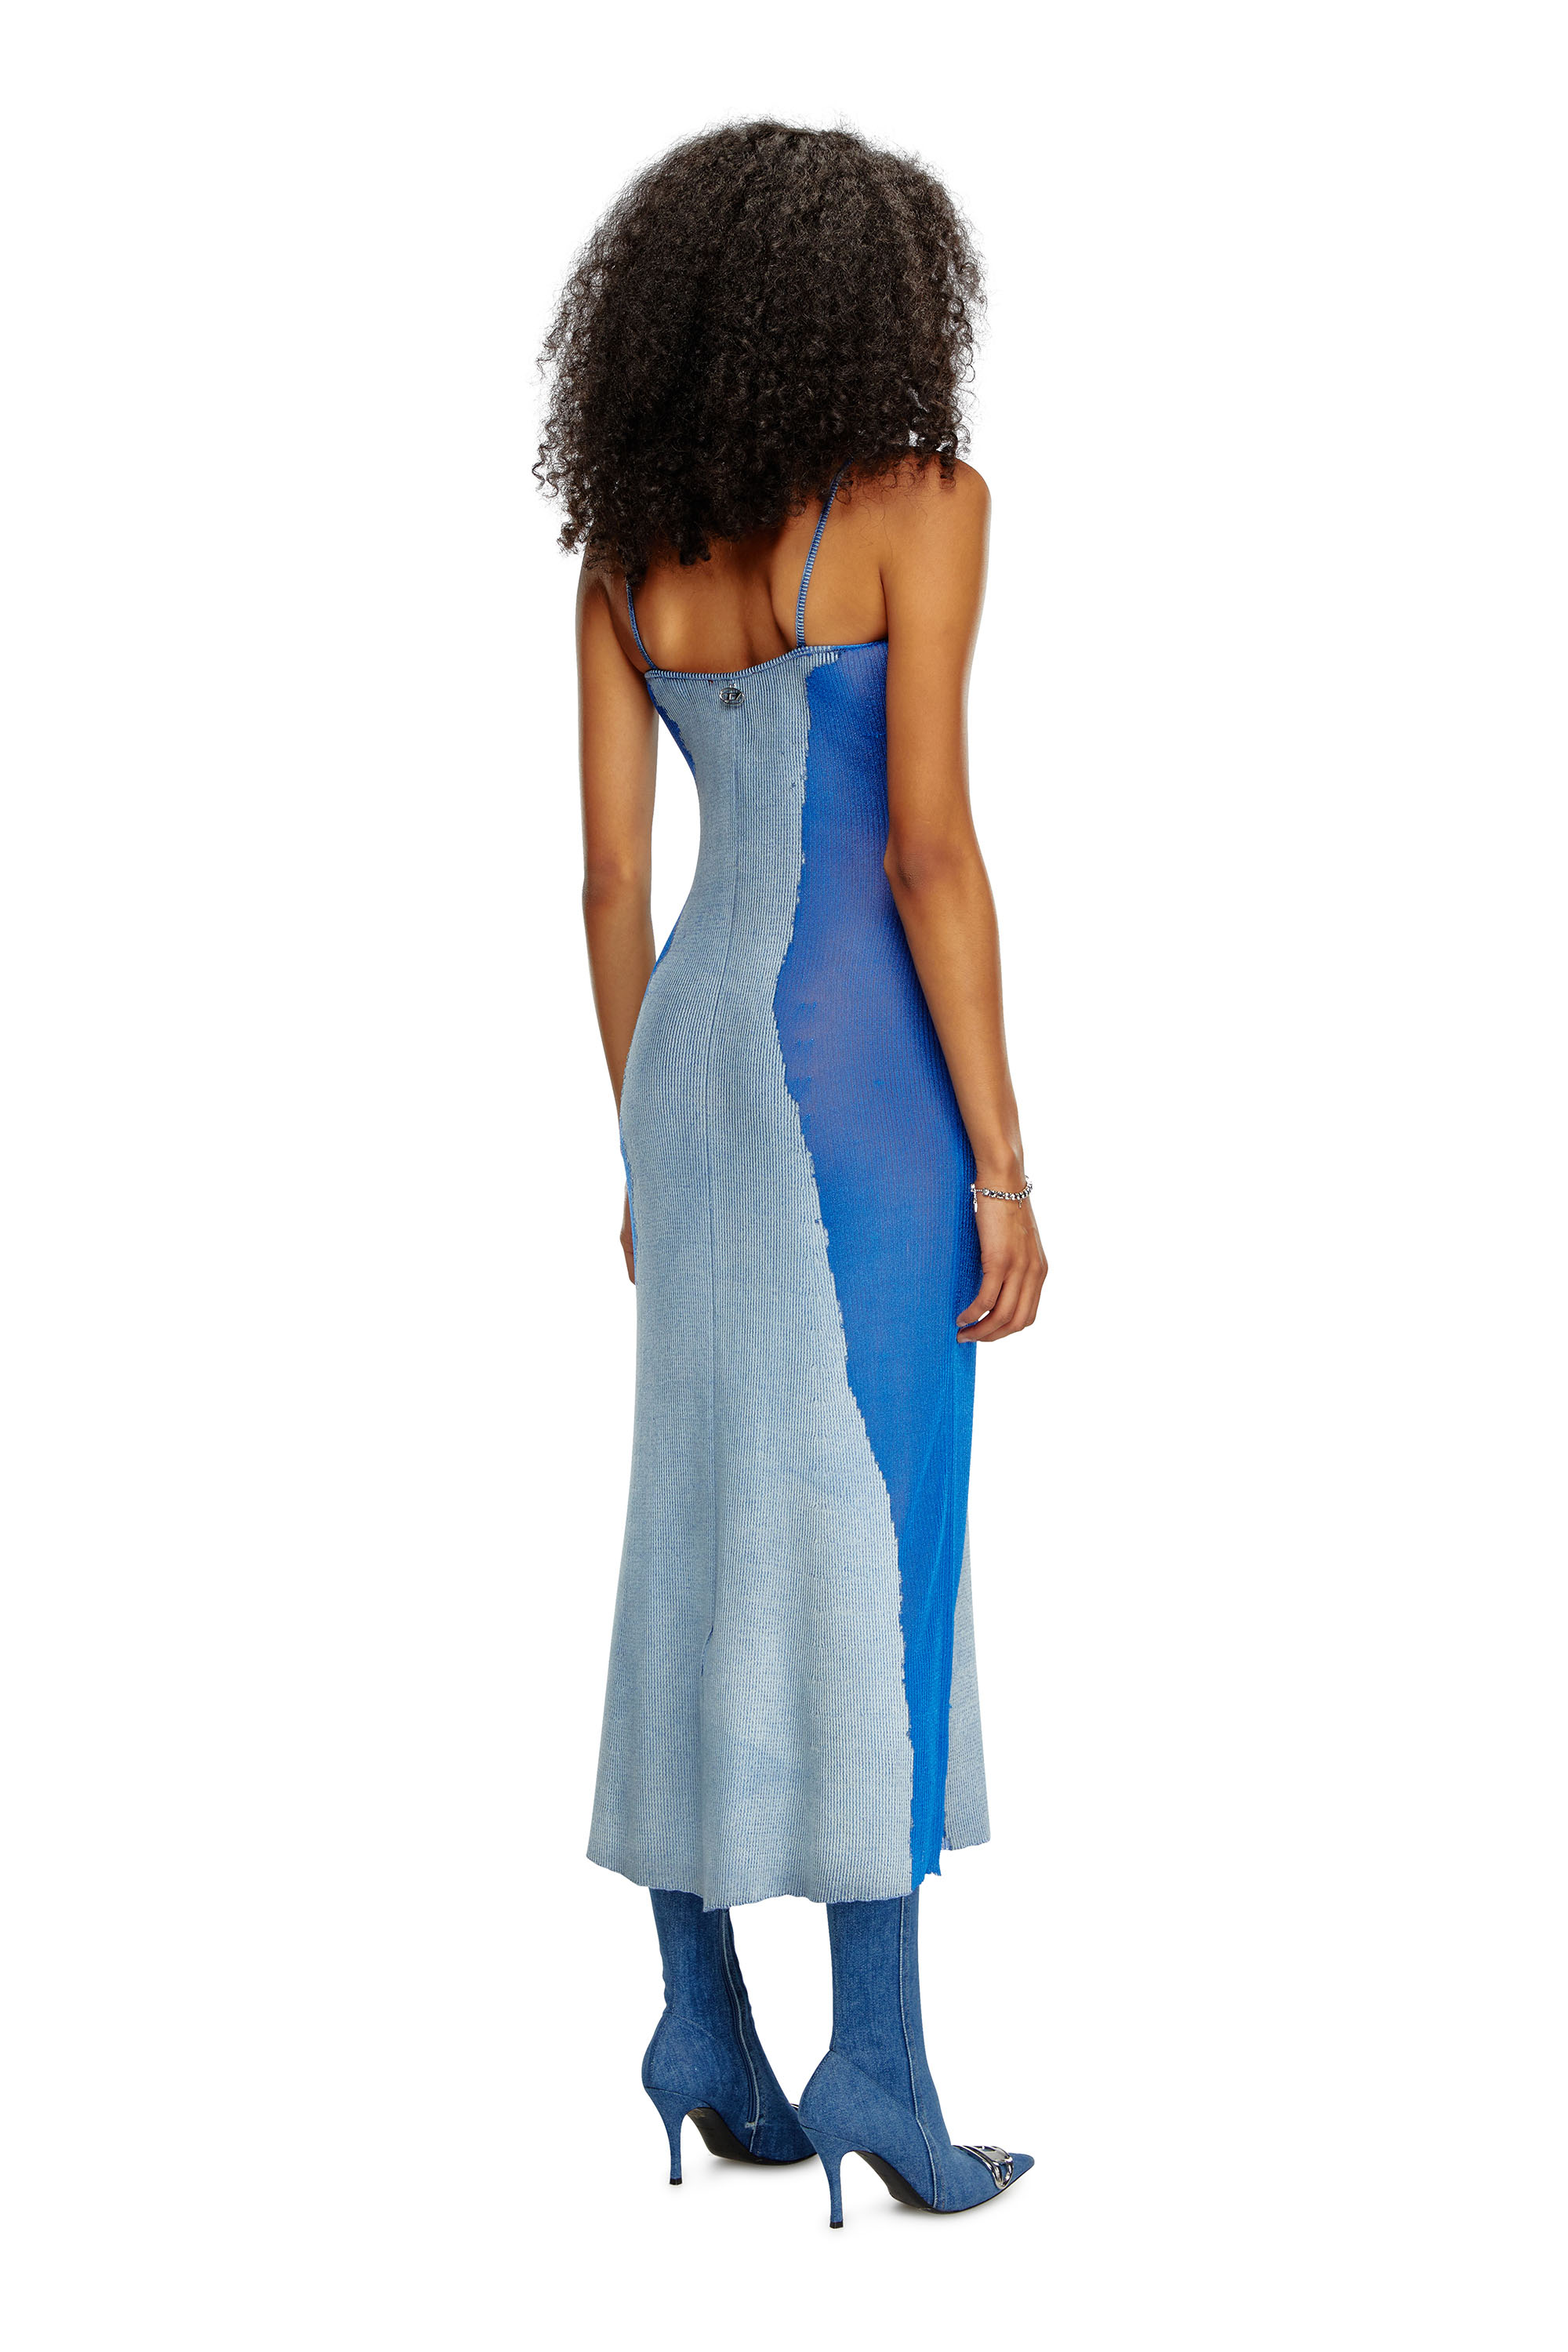 Diesel - M-EDAGLIA, Mujer Vestido lencero midi de tejido con técnica dévoré in Azul marino - Image 3